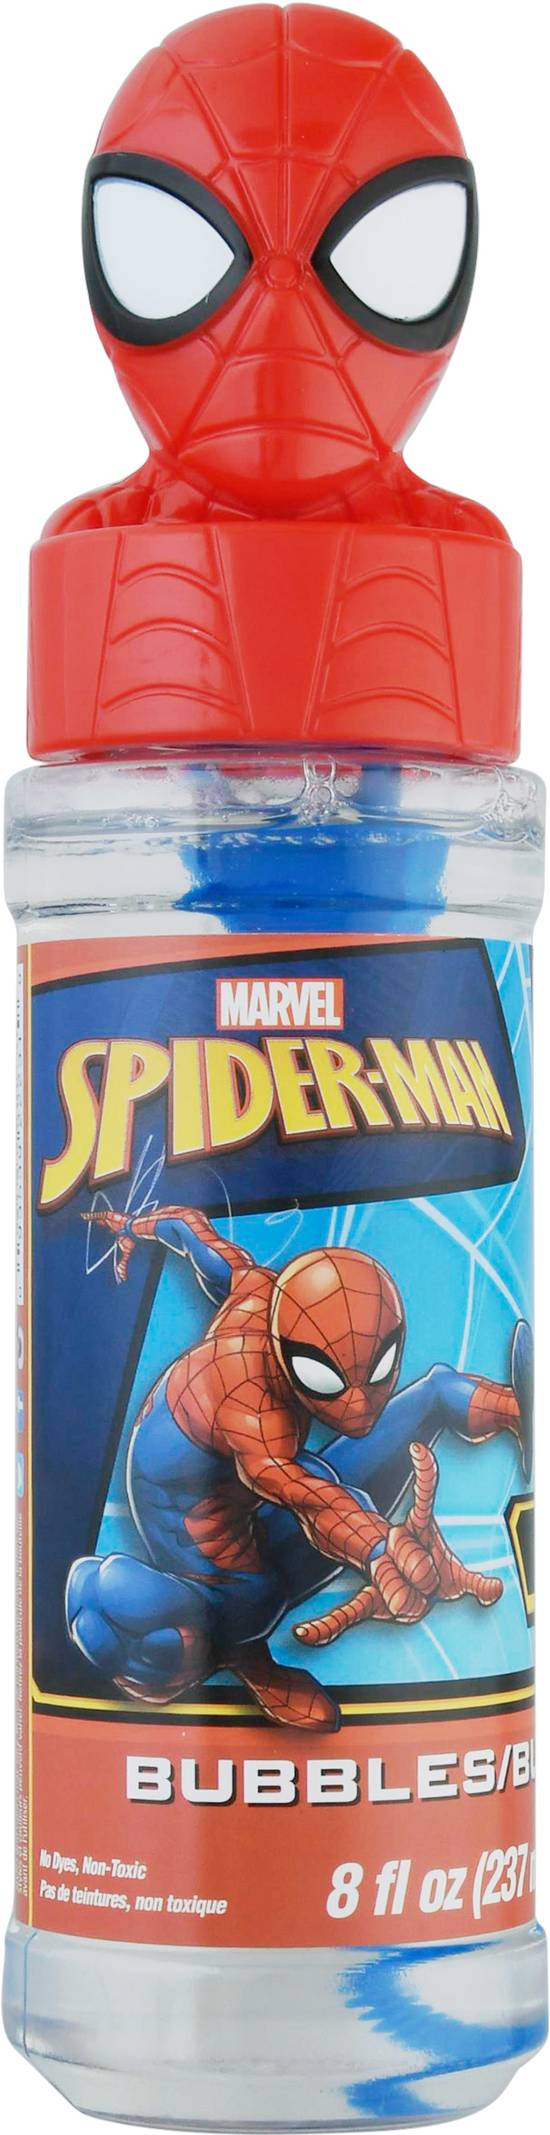 Marvel Spider Man Bubbles (8 fl oz)